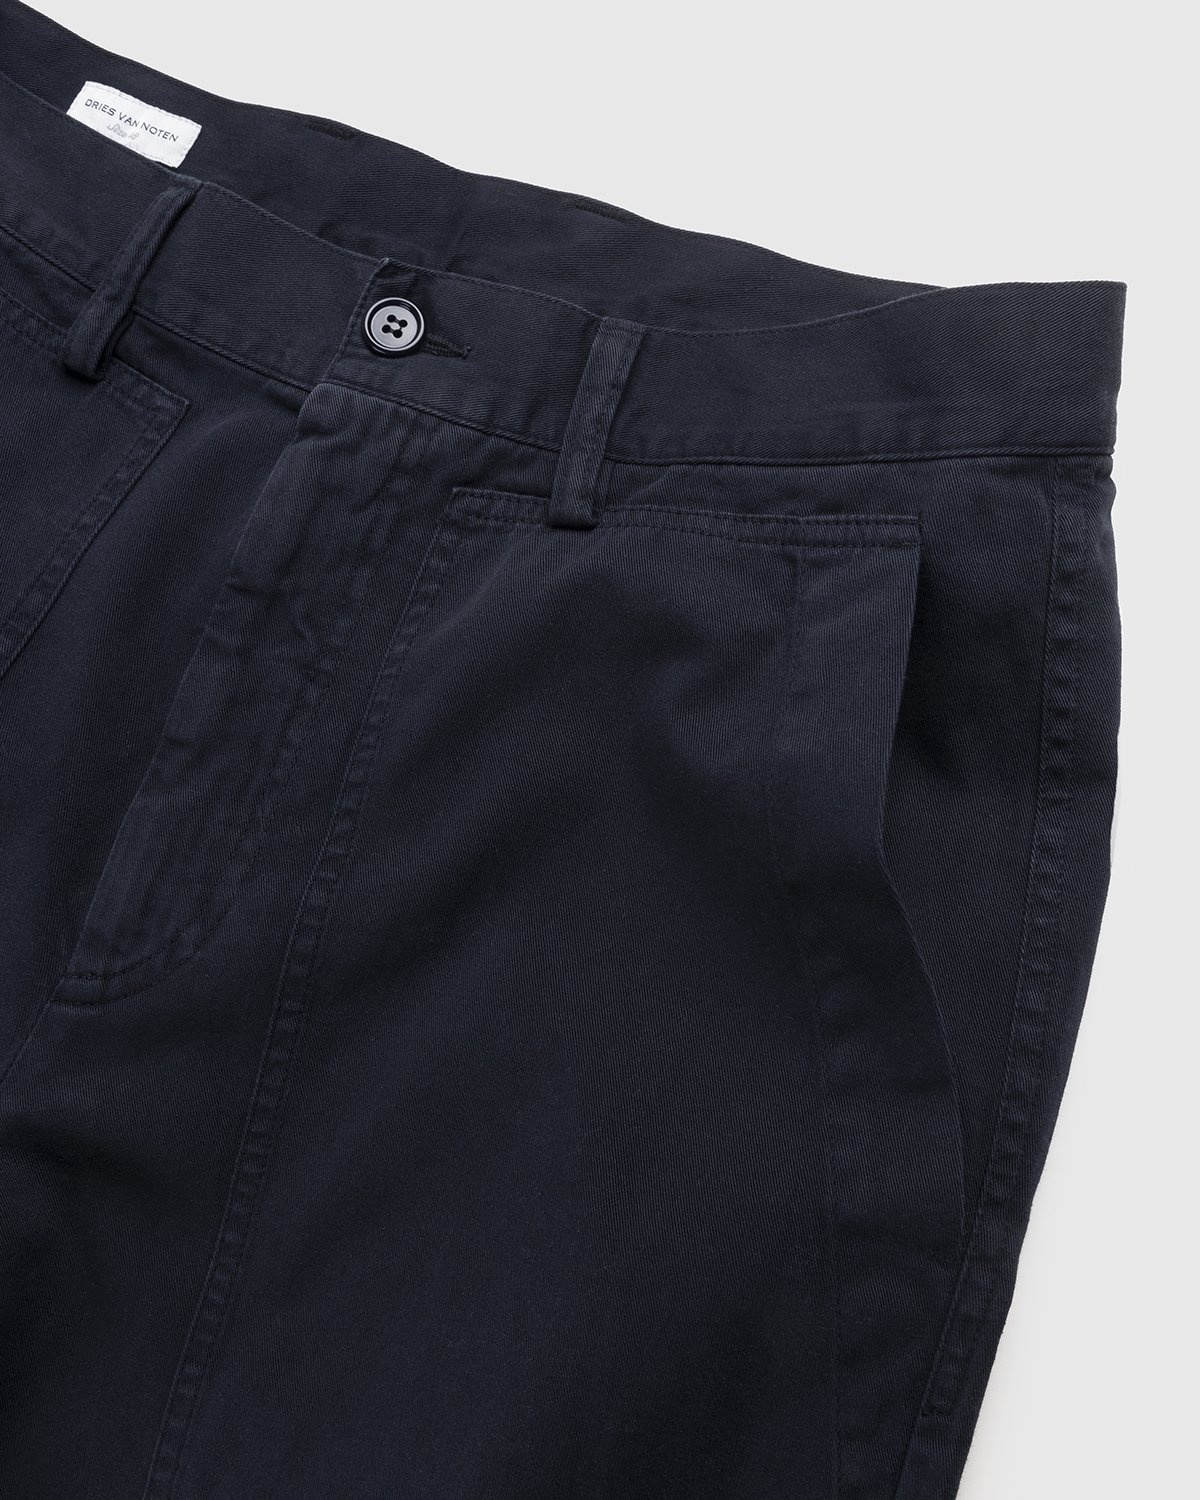 Dries van Noten – Pilson Pants Navy - Trousers - Blue - Image 4